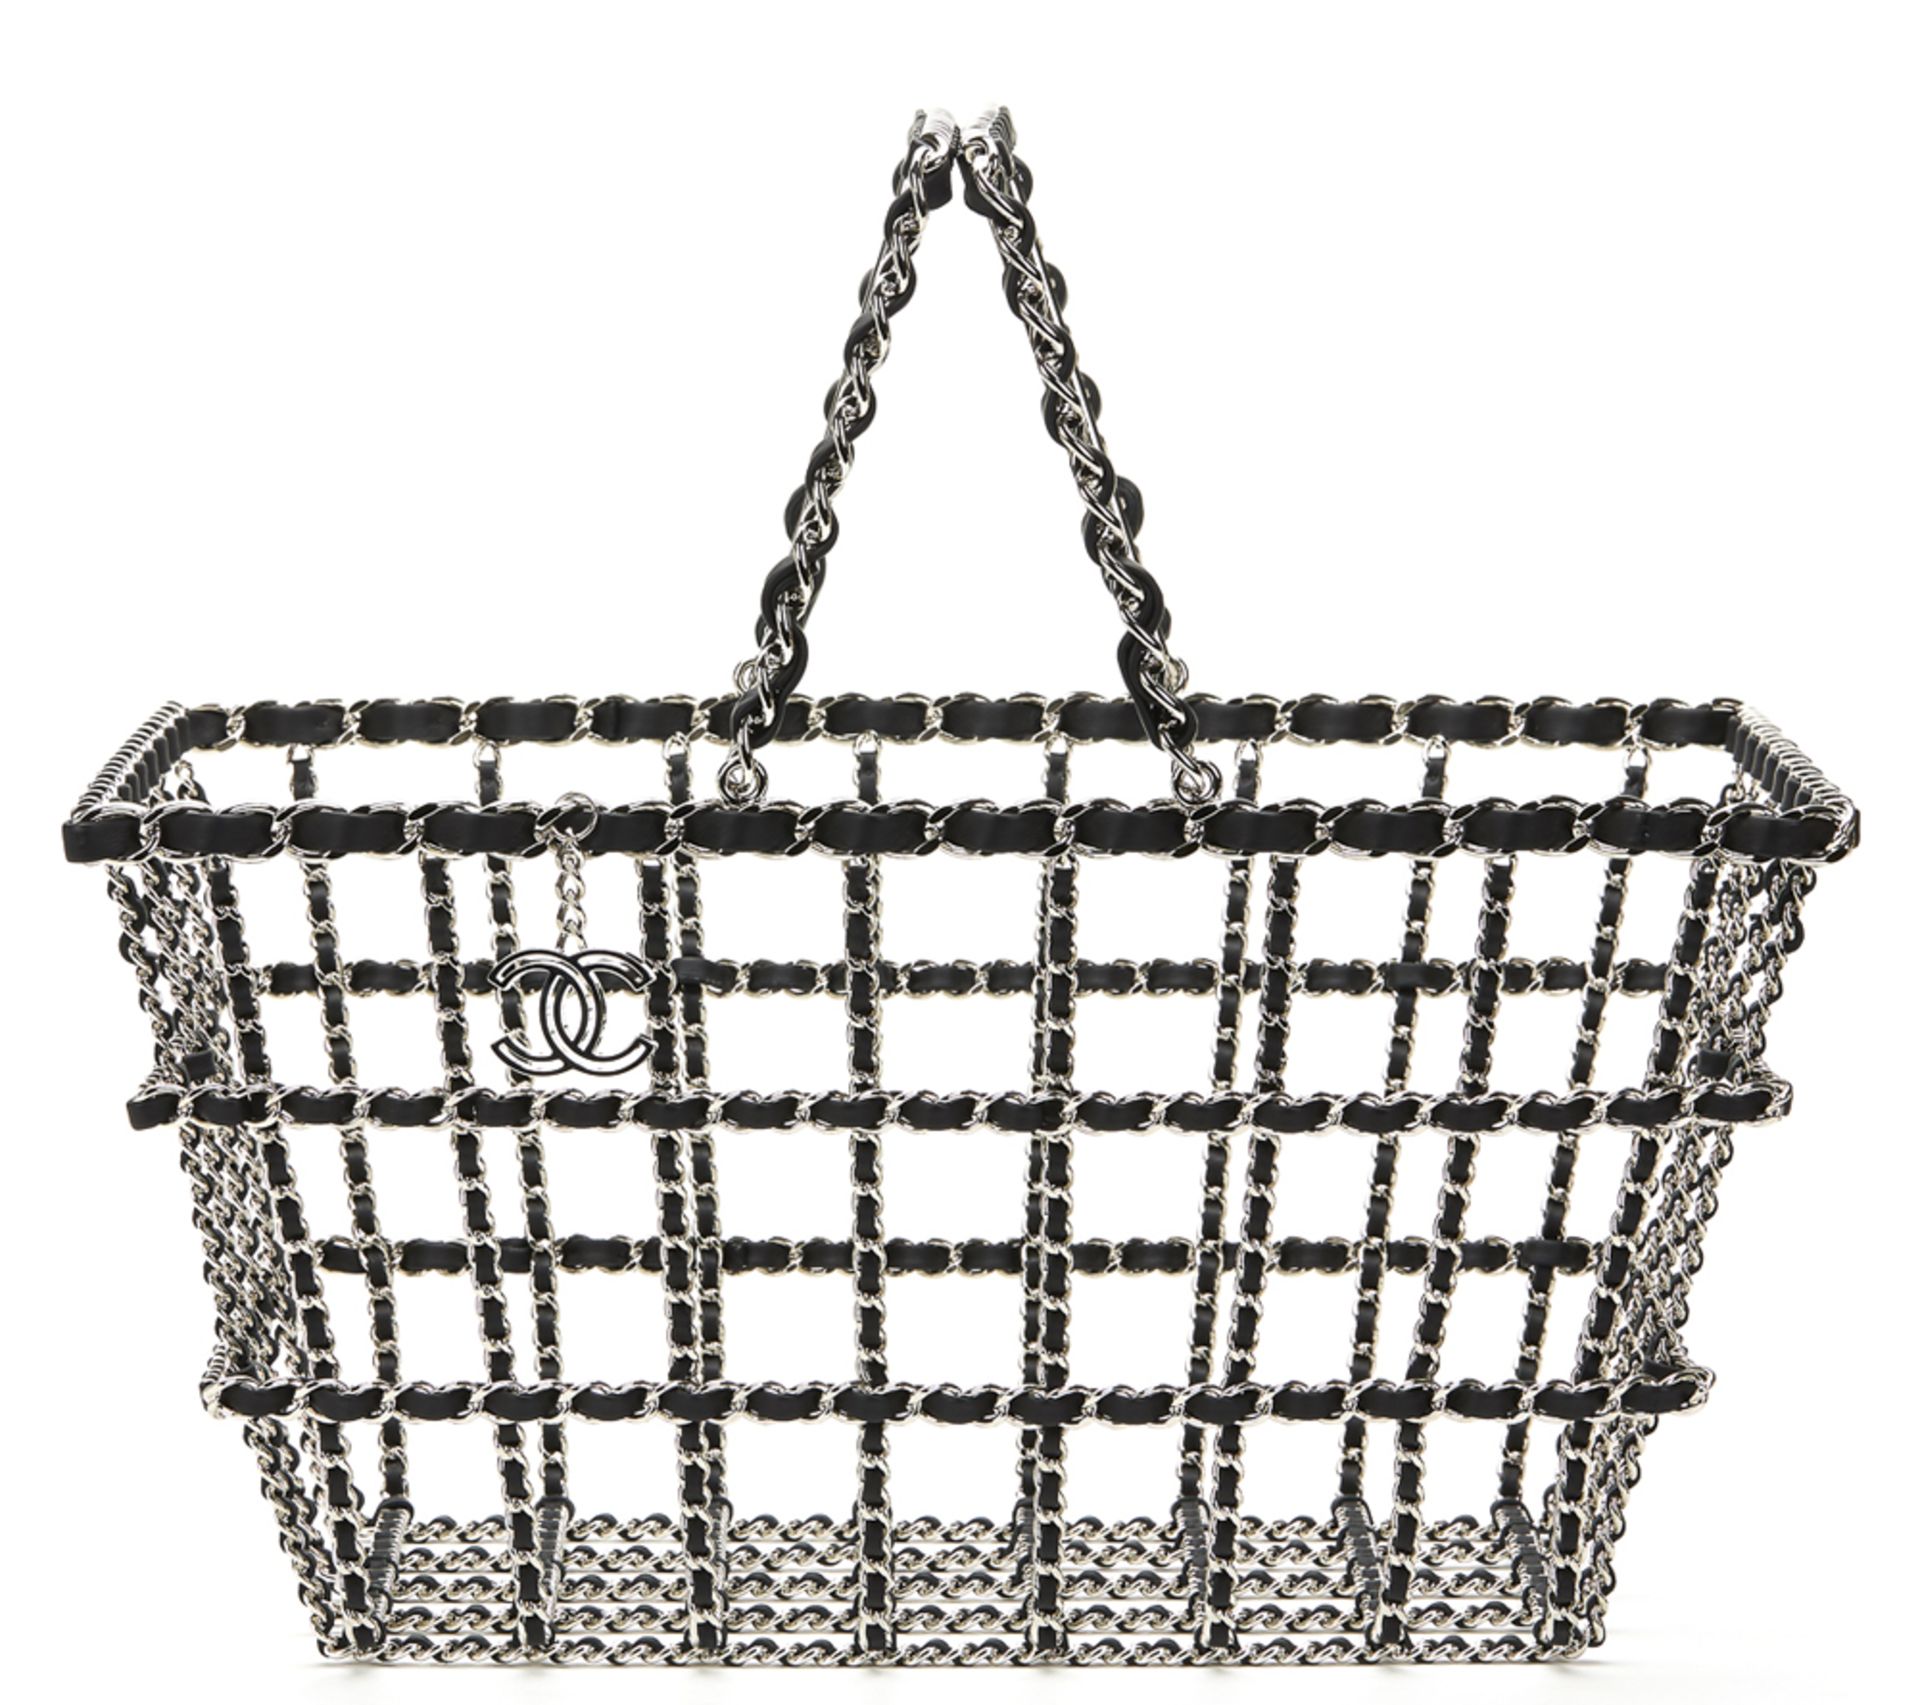 Silver & Black Calfskin Leather Fall 2014 Act 2 Basket Bag